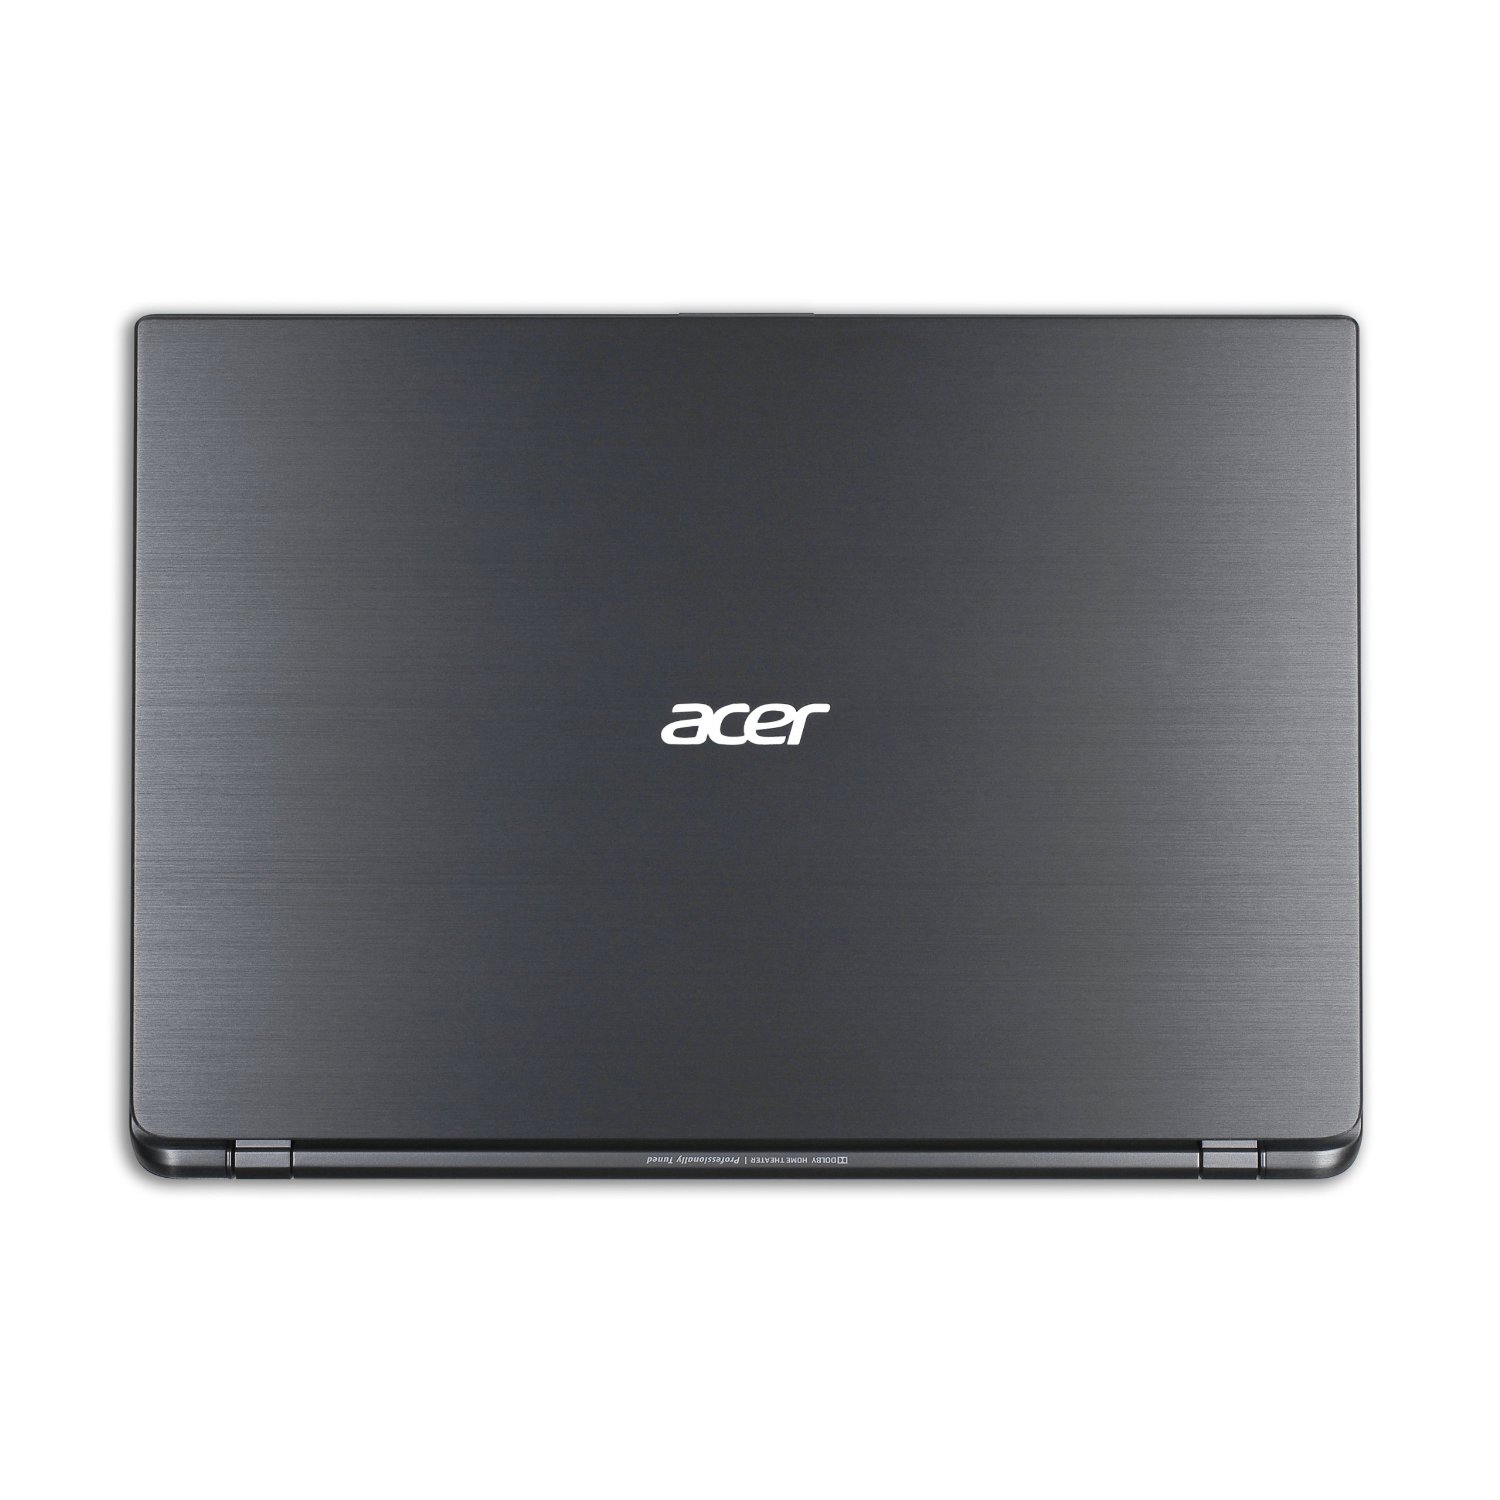 Acer Aspire M5-481TG-6814